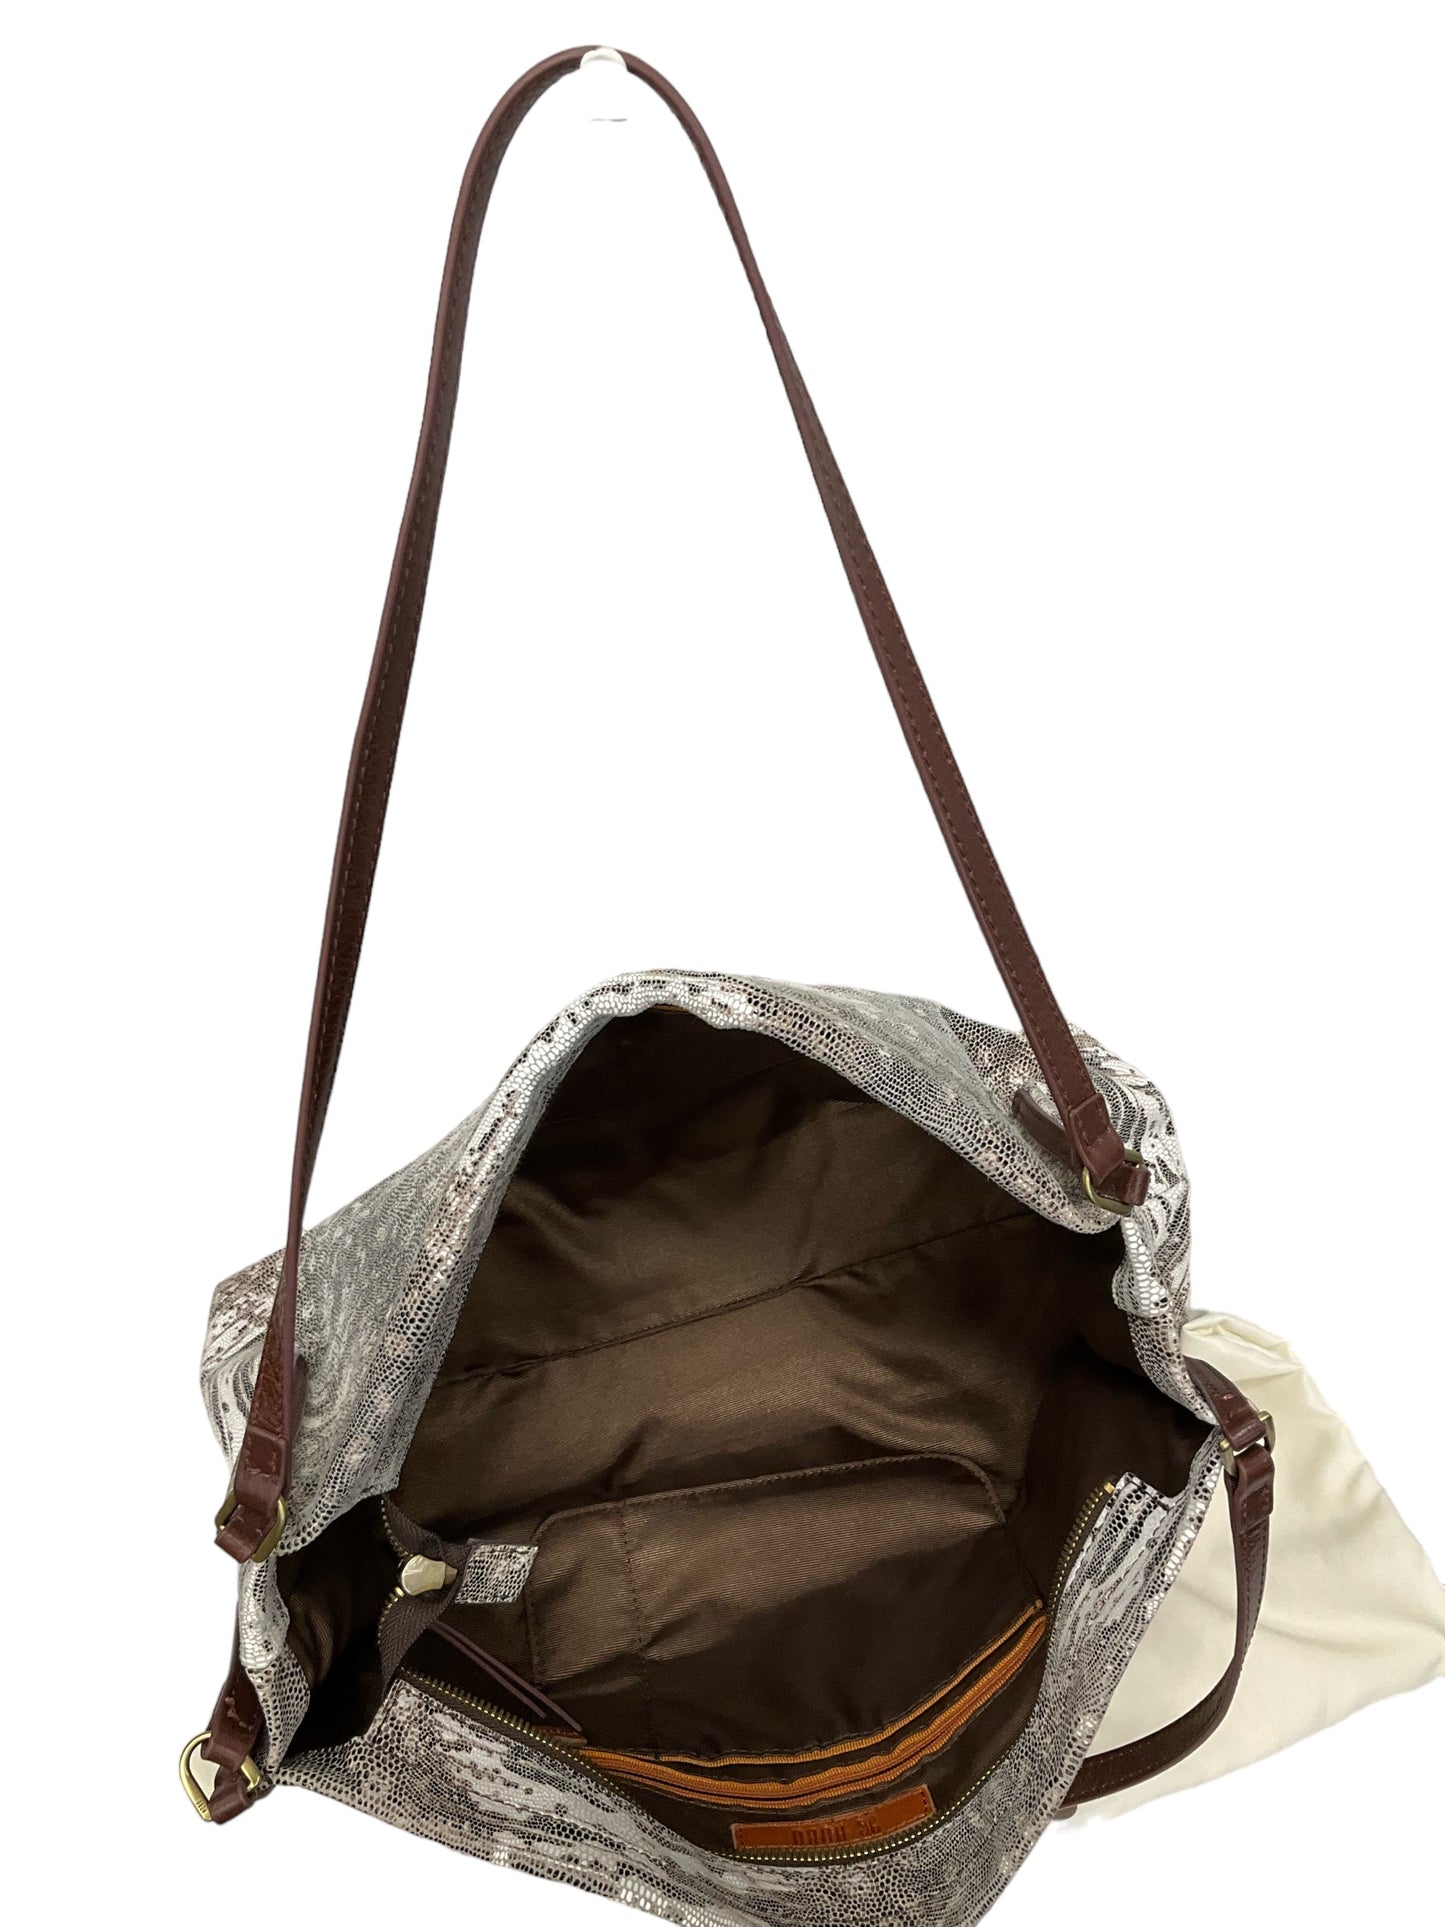 Handbag Leather By Hobo Intl  Size: Large